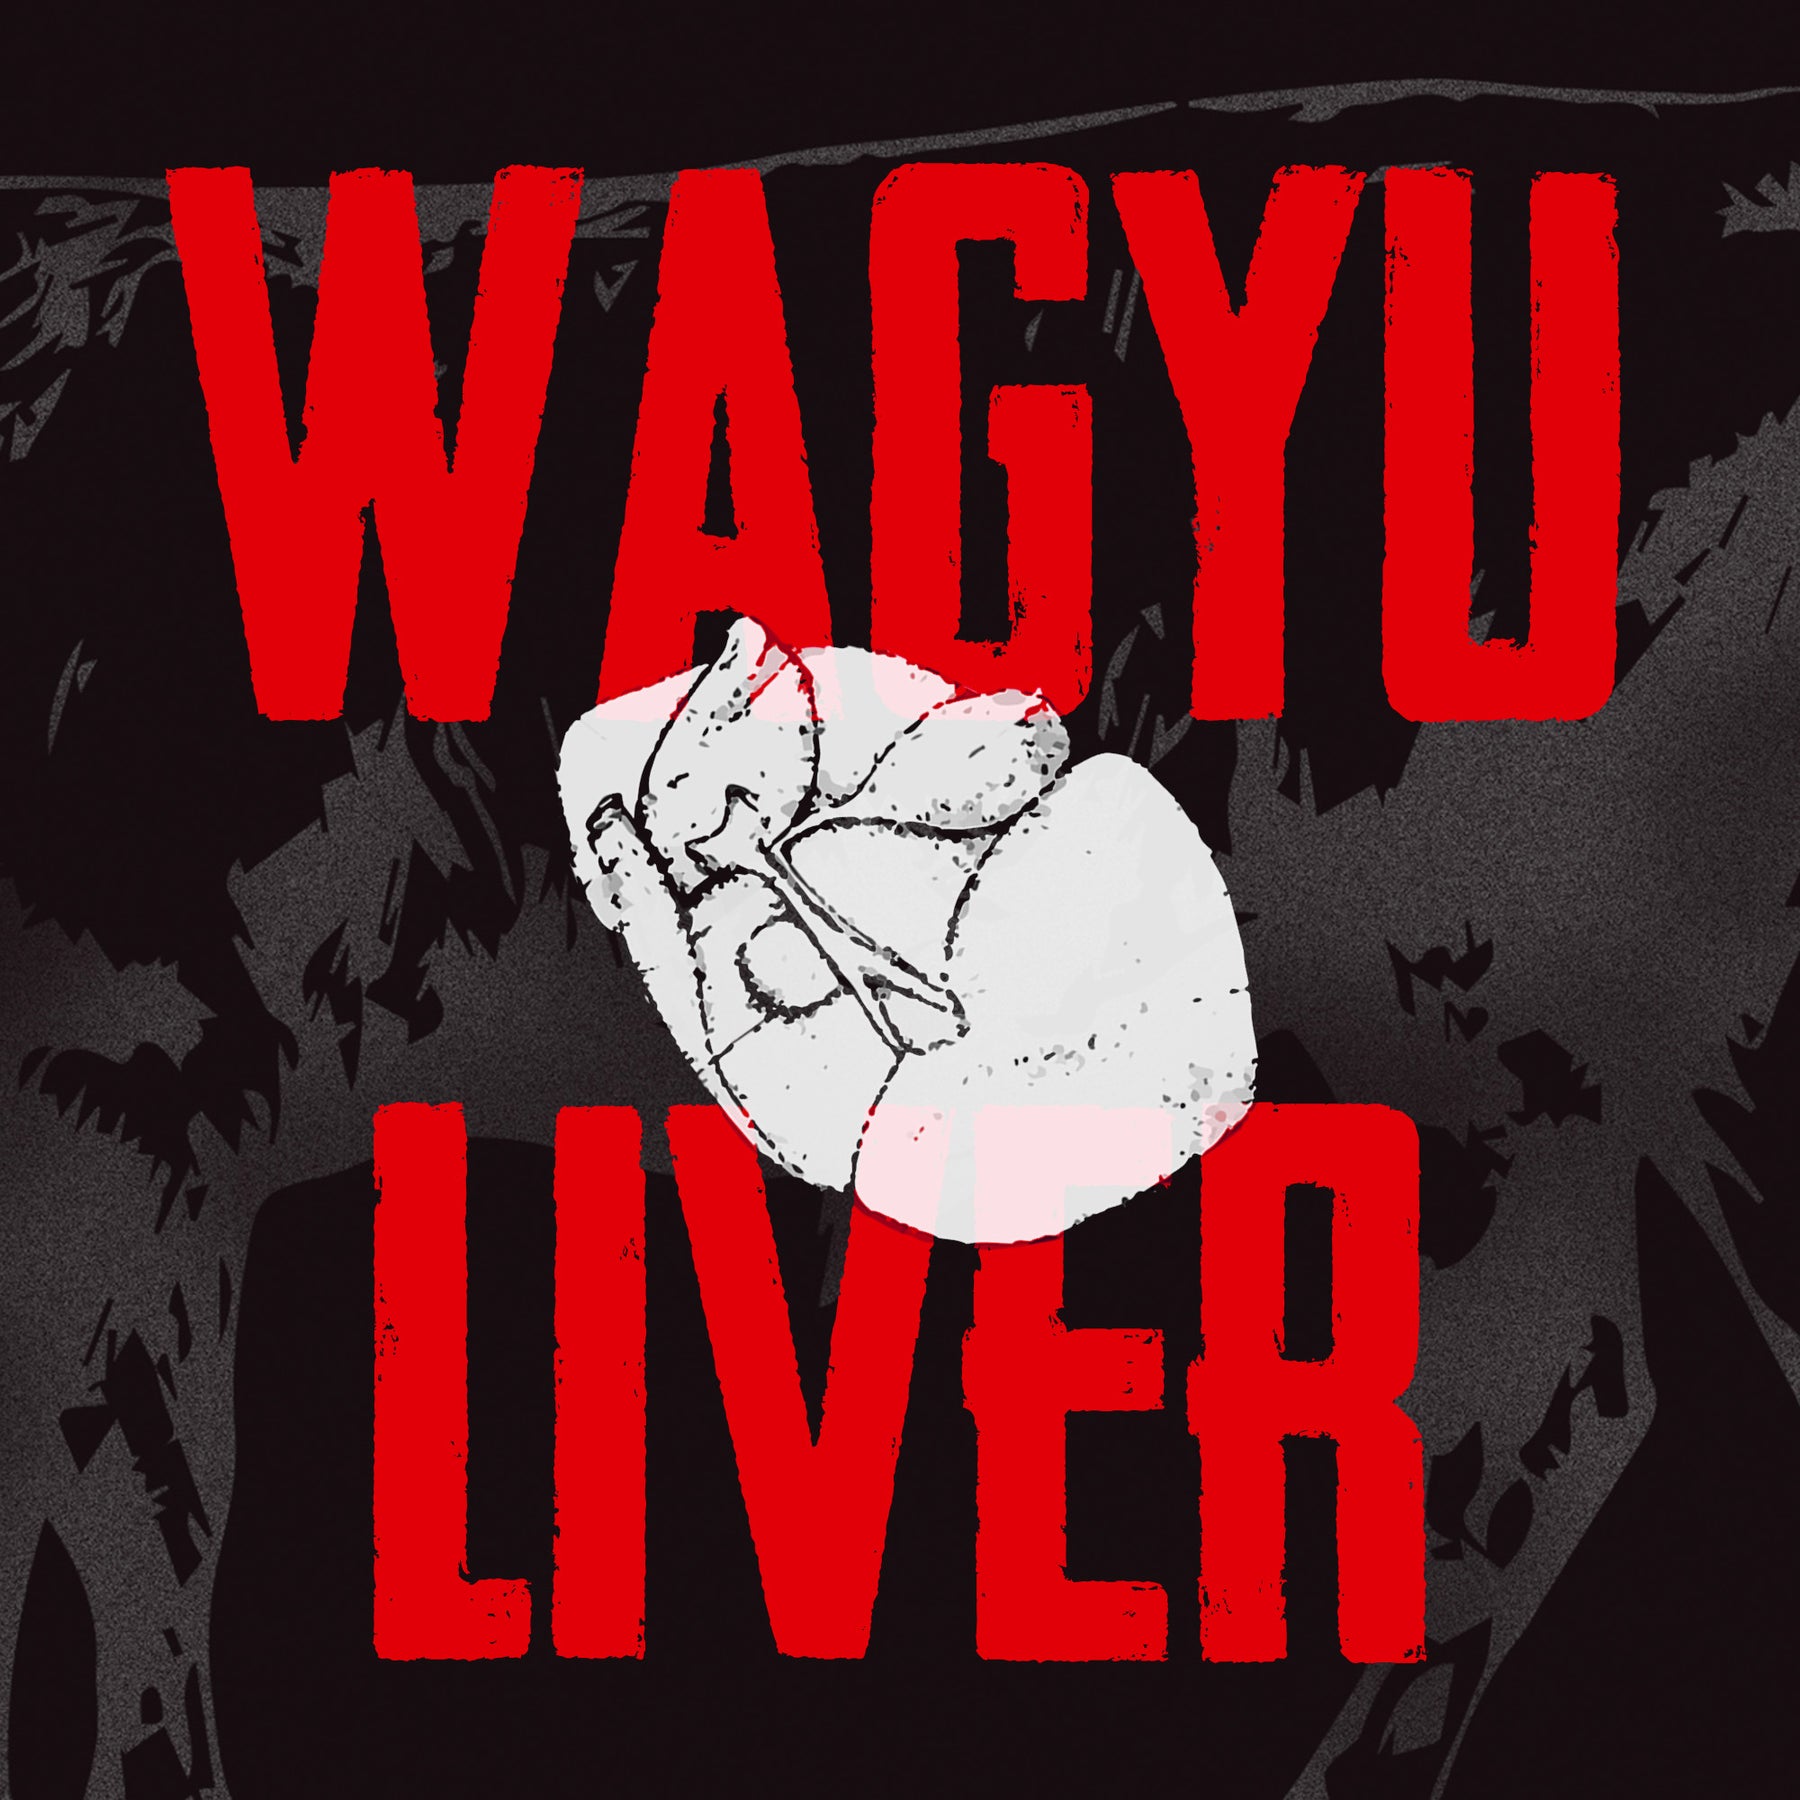 Wagyu Liver